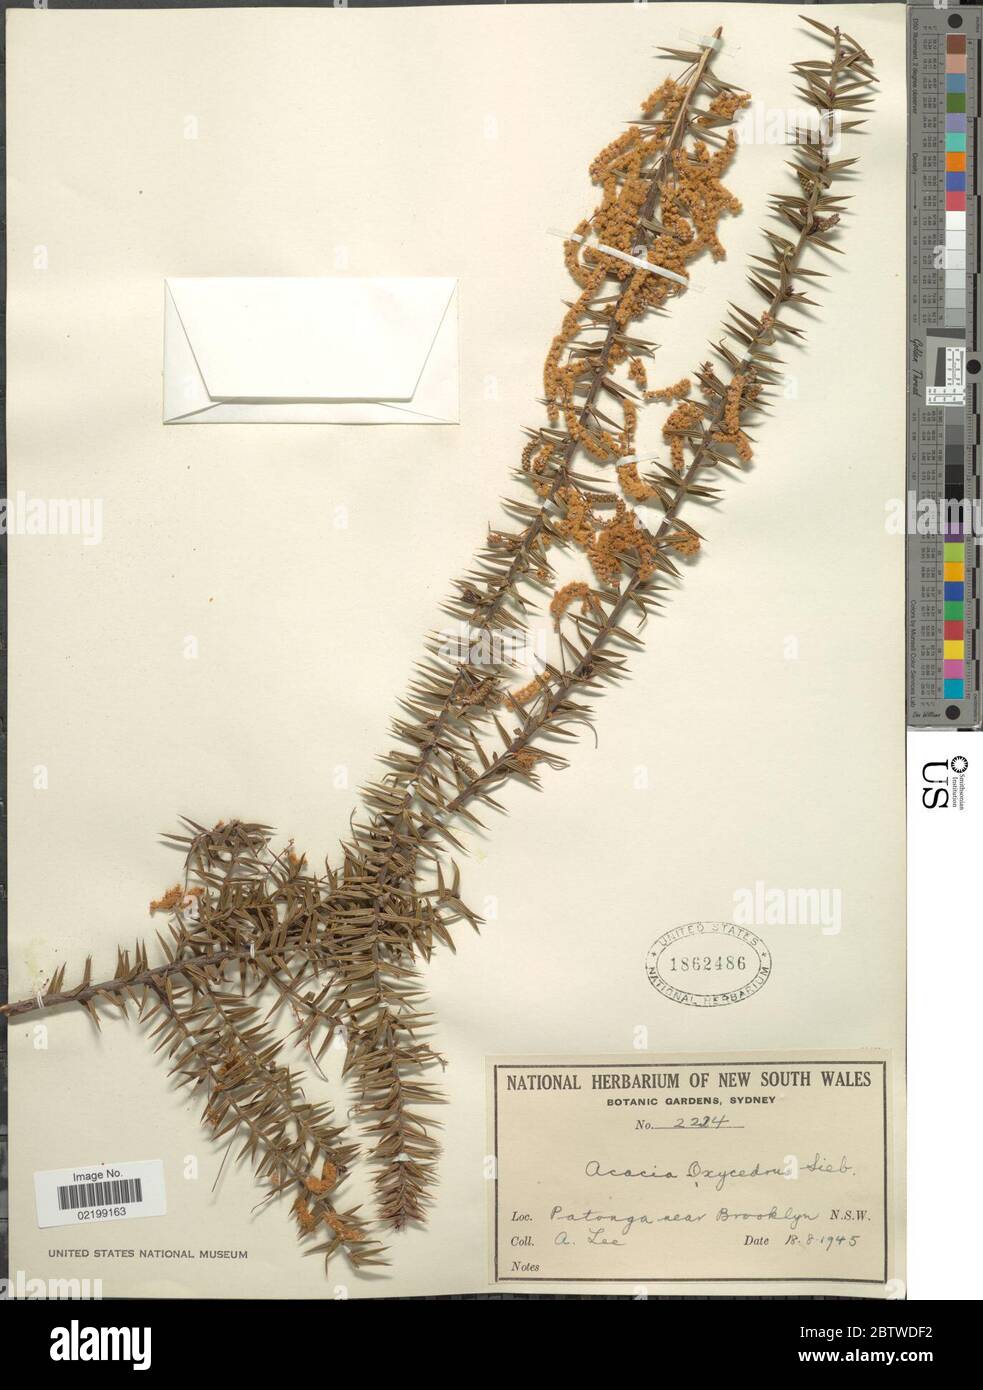 Acacia oxycedrus. Stock Photo